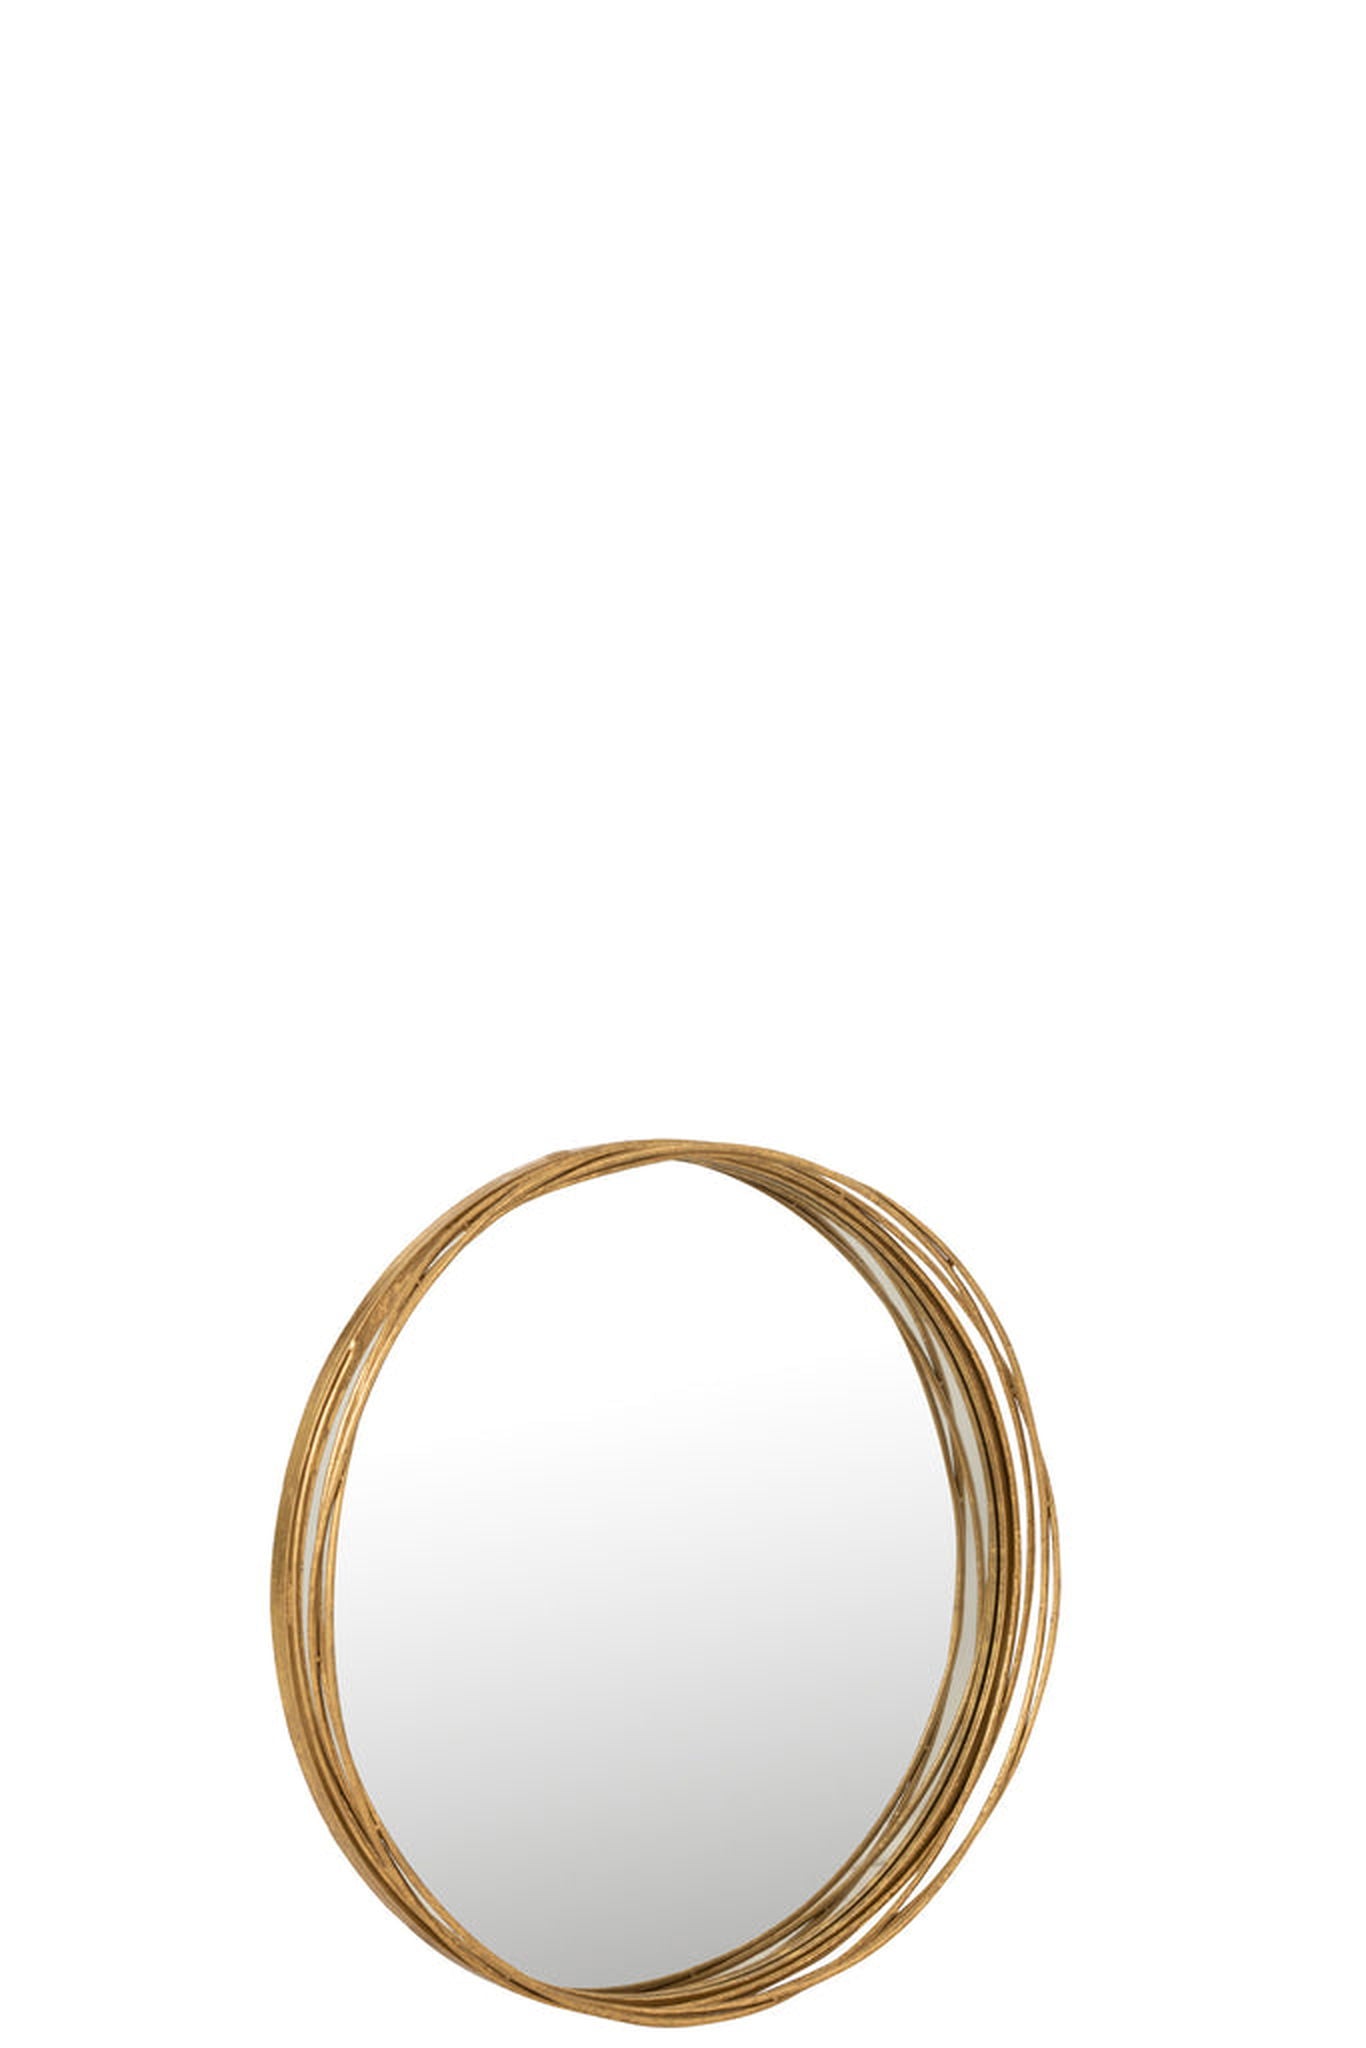 Mirror Aurora Round Iron/Glass Gold Small - vivahabitat.com